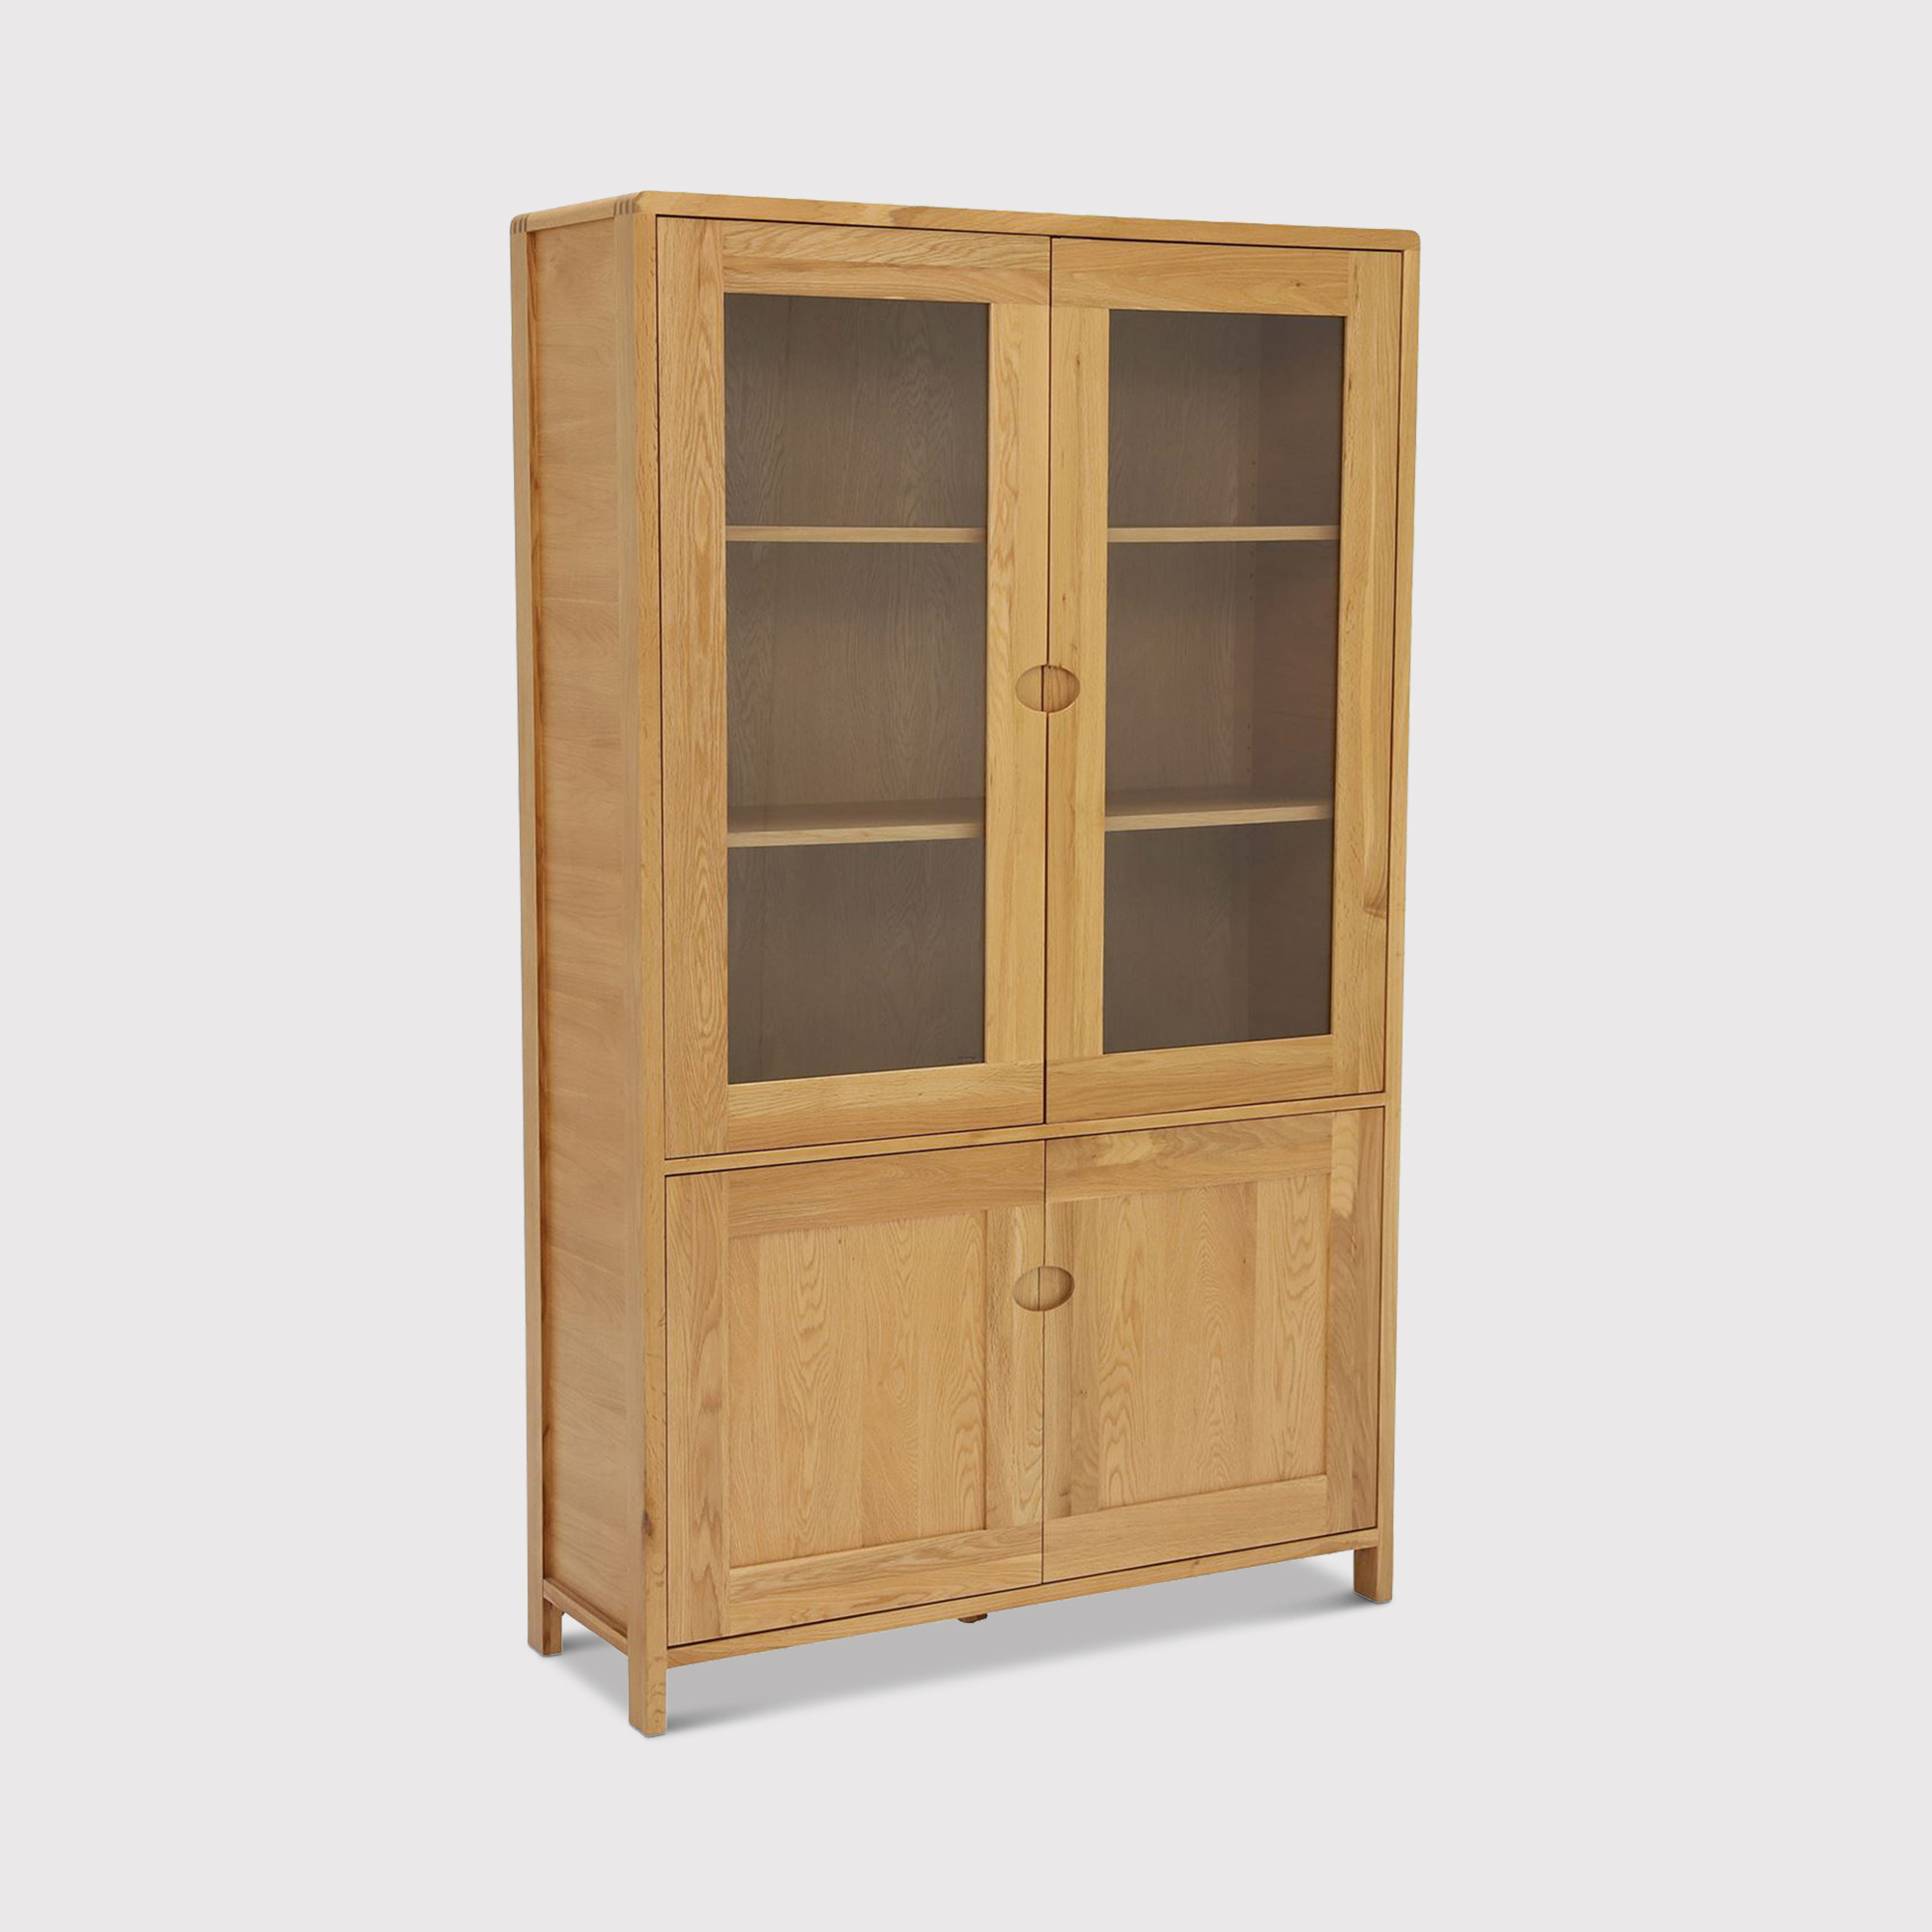 Ercol Bosco Display Cabinet, Neutral Oak - Barker & Stonehouse - image 1